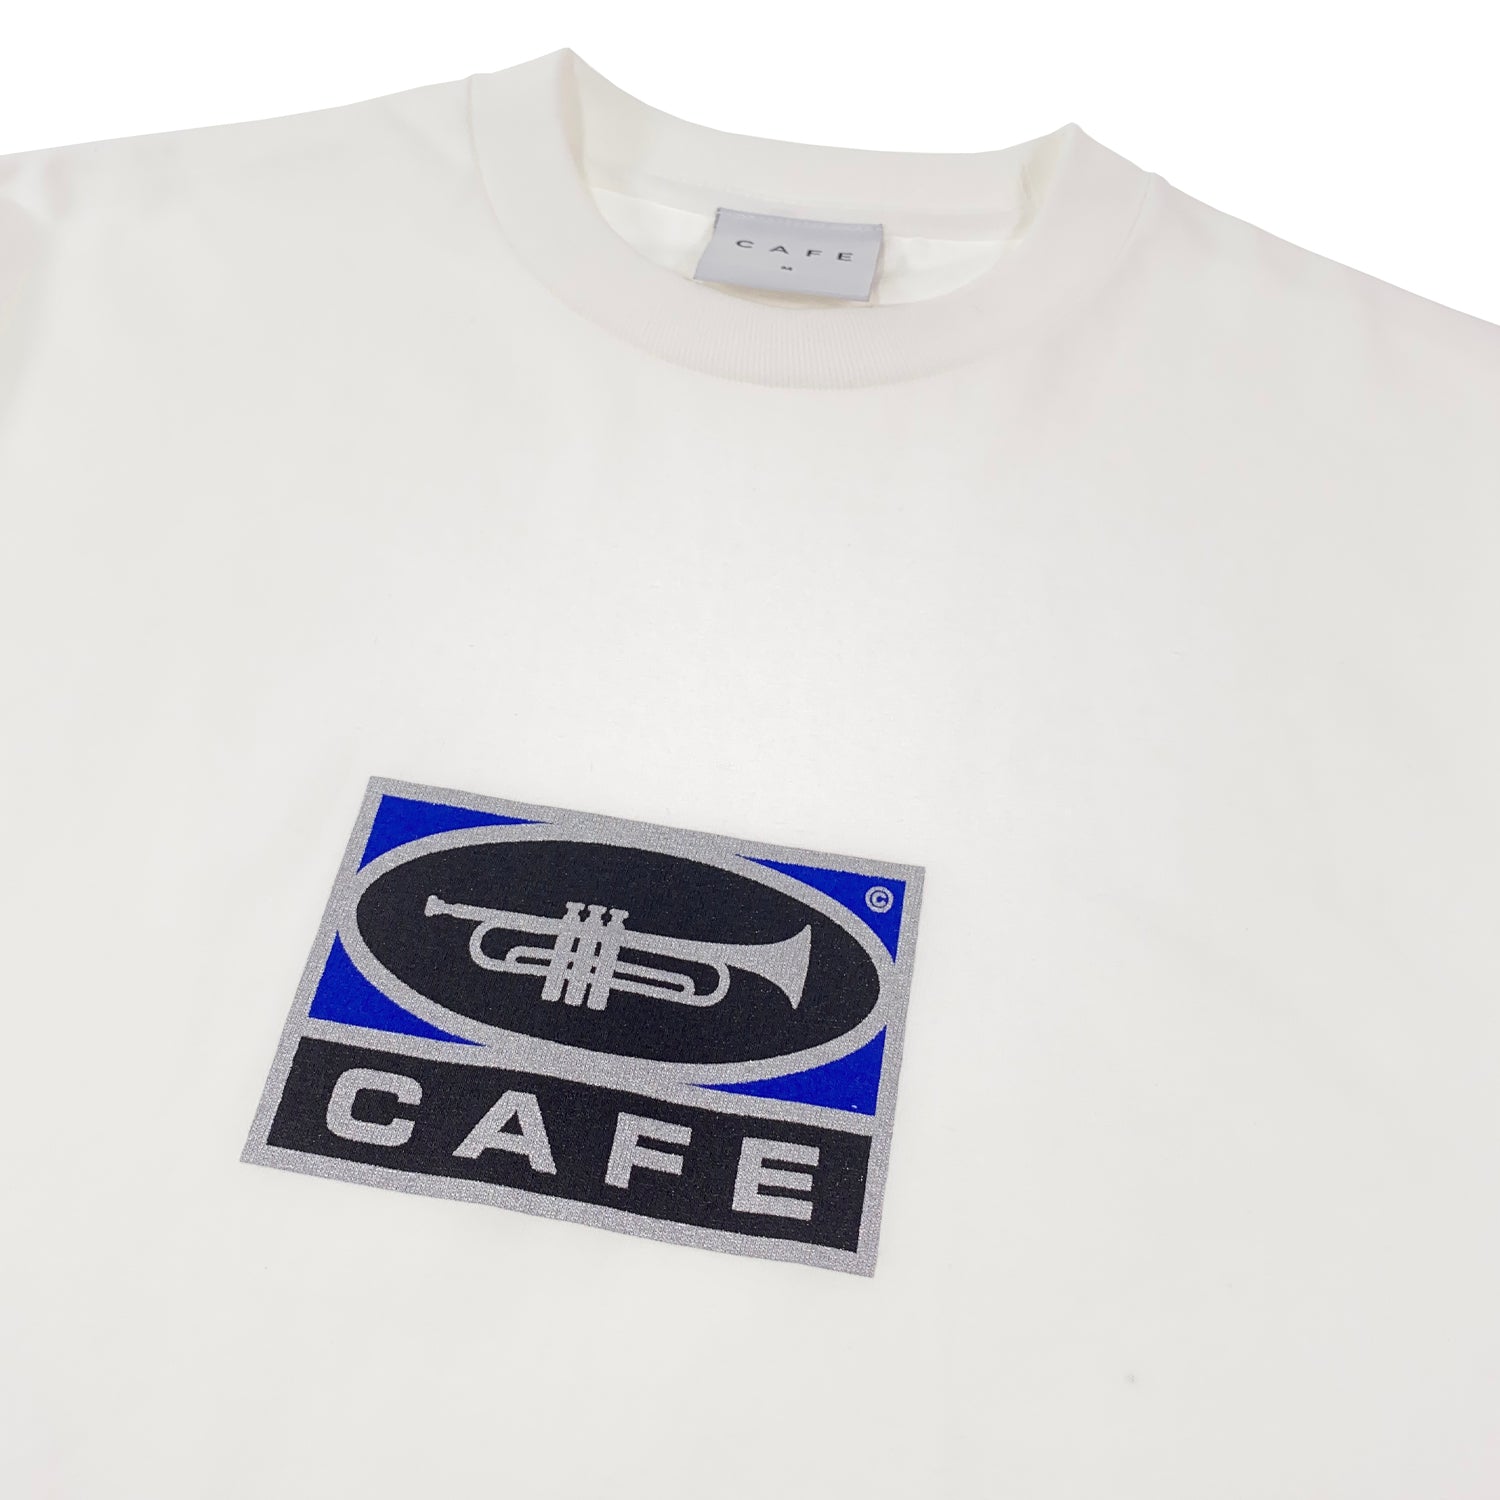 Skateboard Cafe - Trumpet Logo T Shirt - White - Prime Delux Store